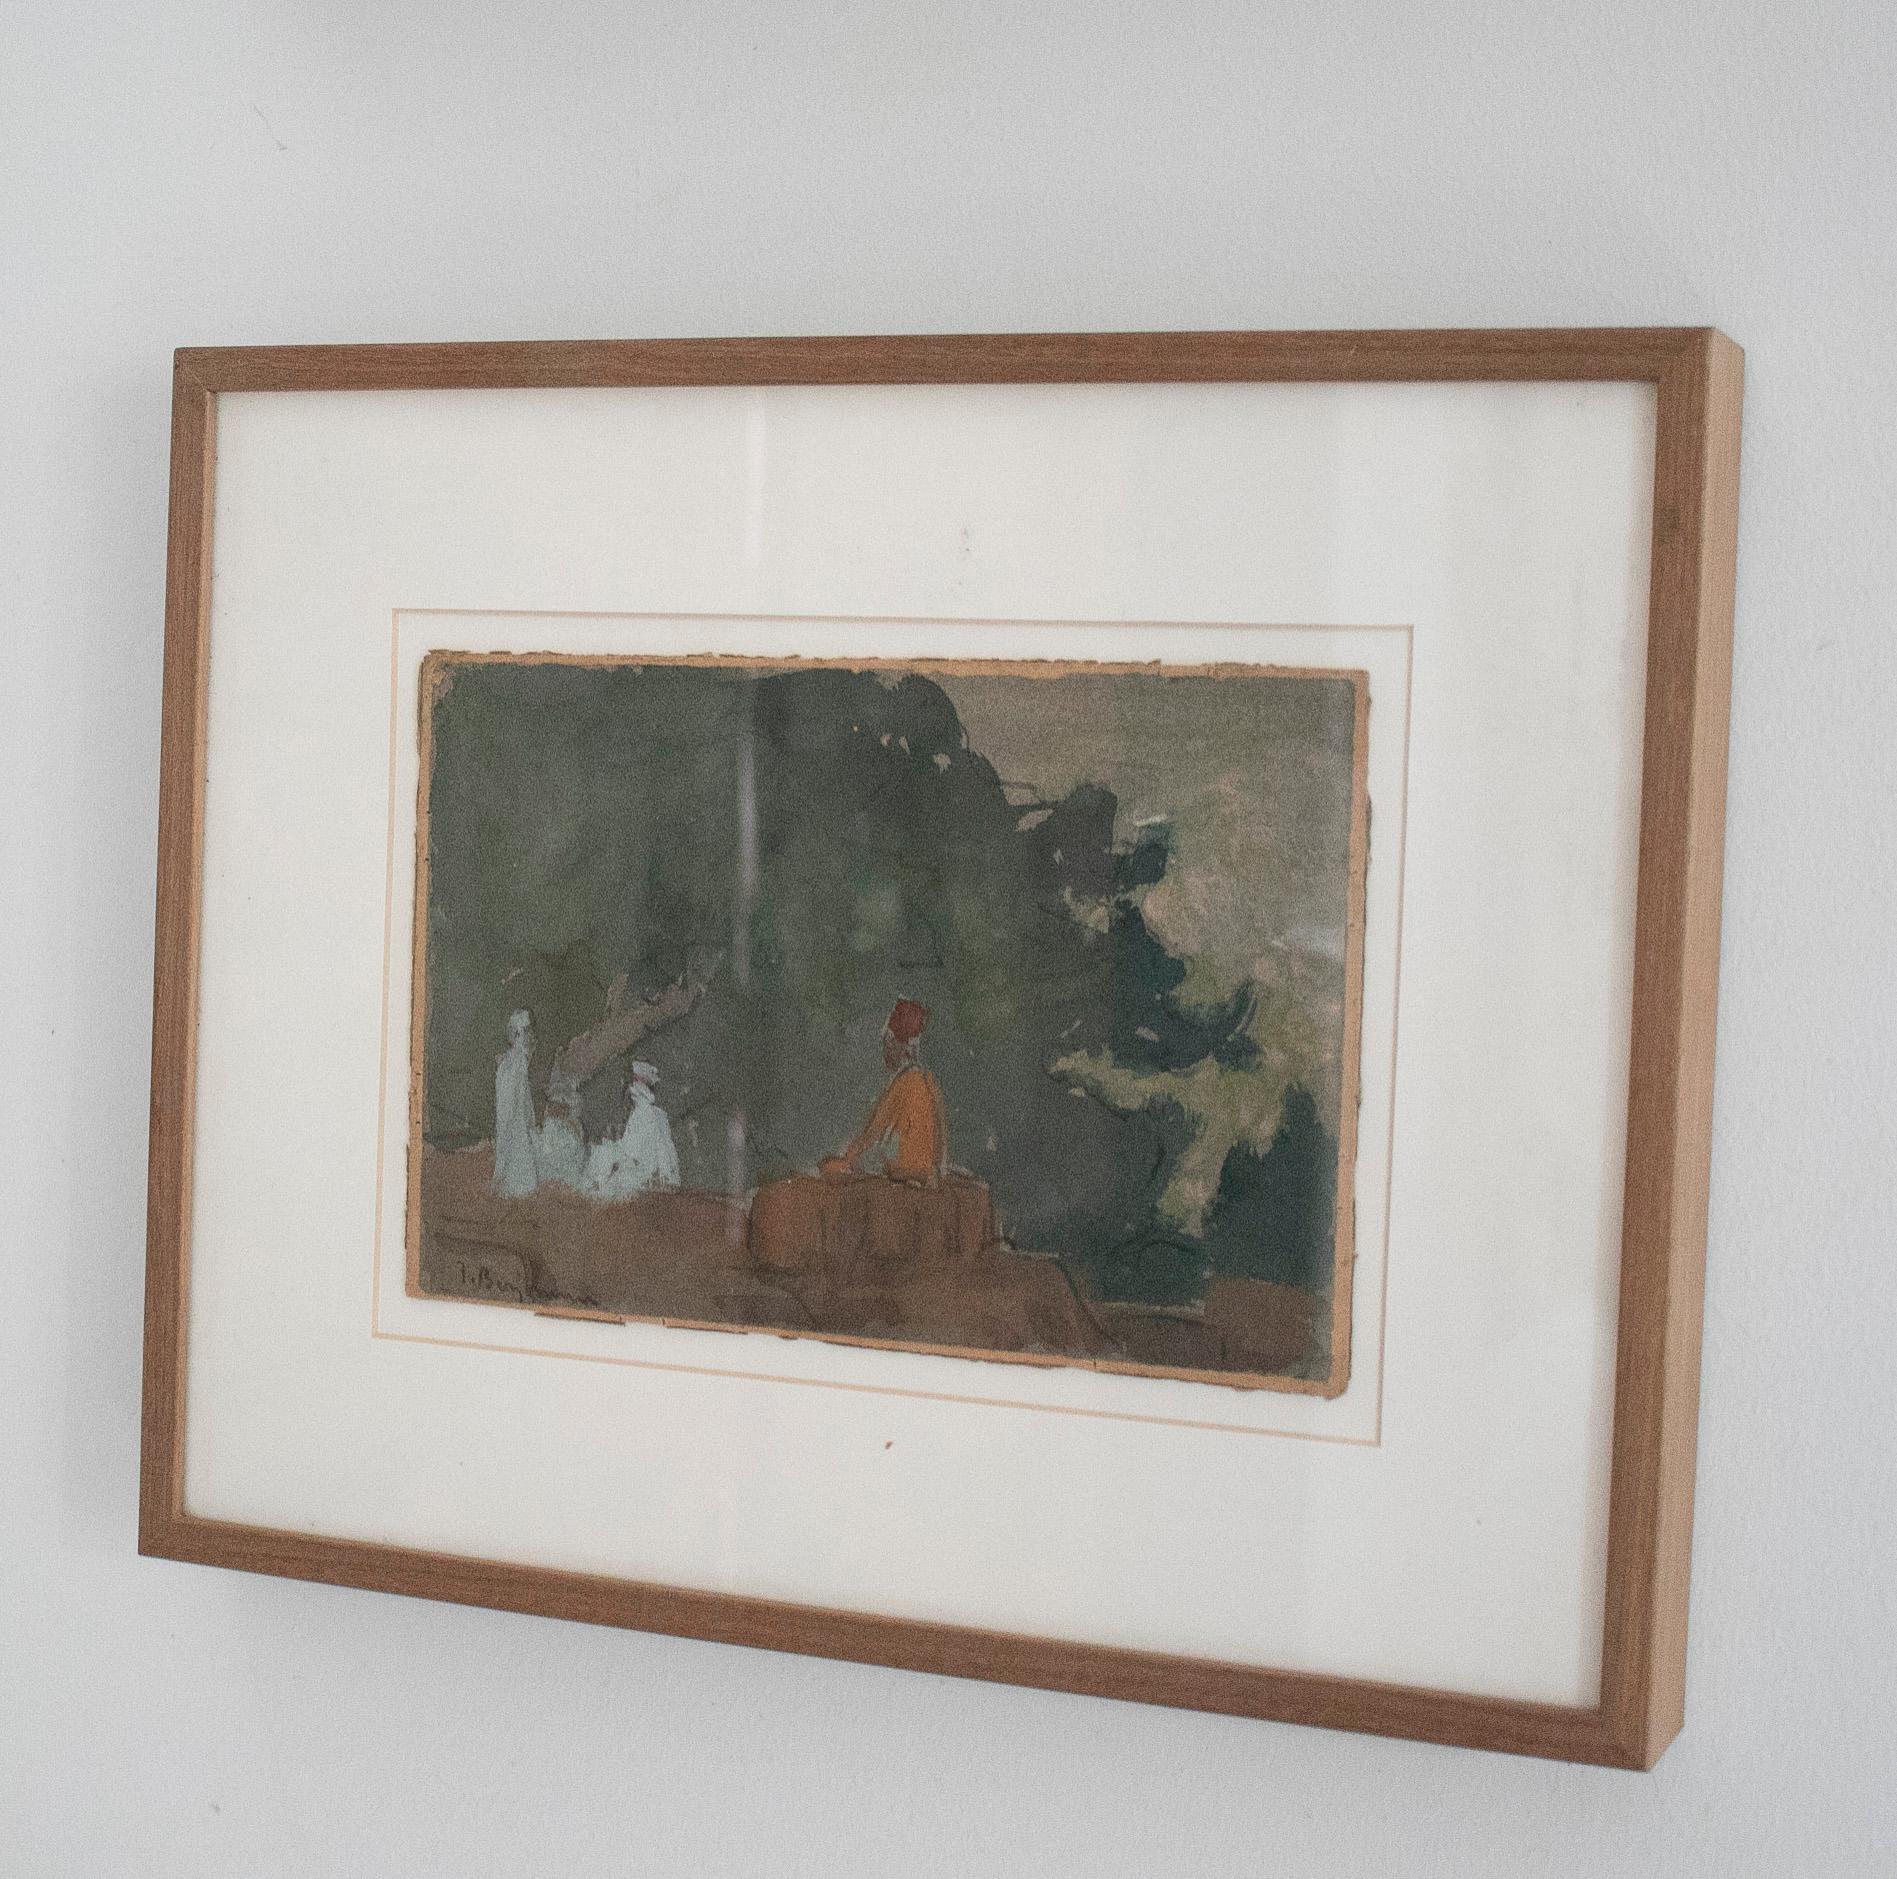 Unique 1970s Spanish impressionist water colour Orientalist painting signed J. Benjamín, with wooden frame

Interior measurements: 14 x 21cm.